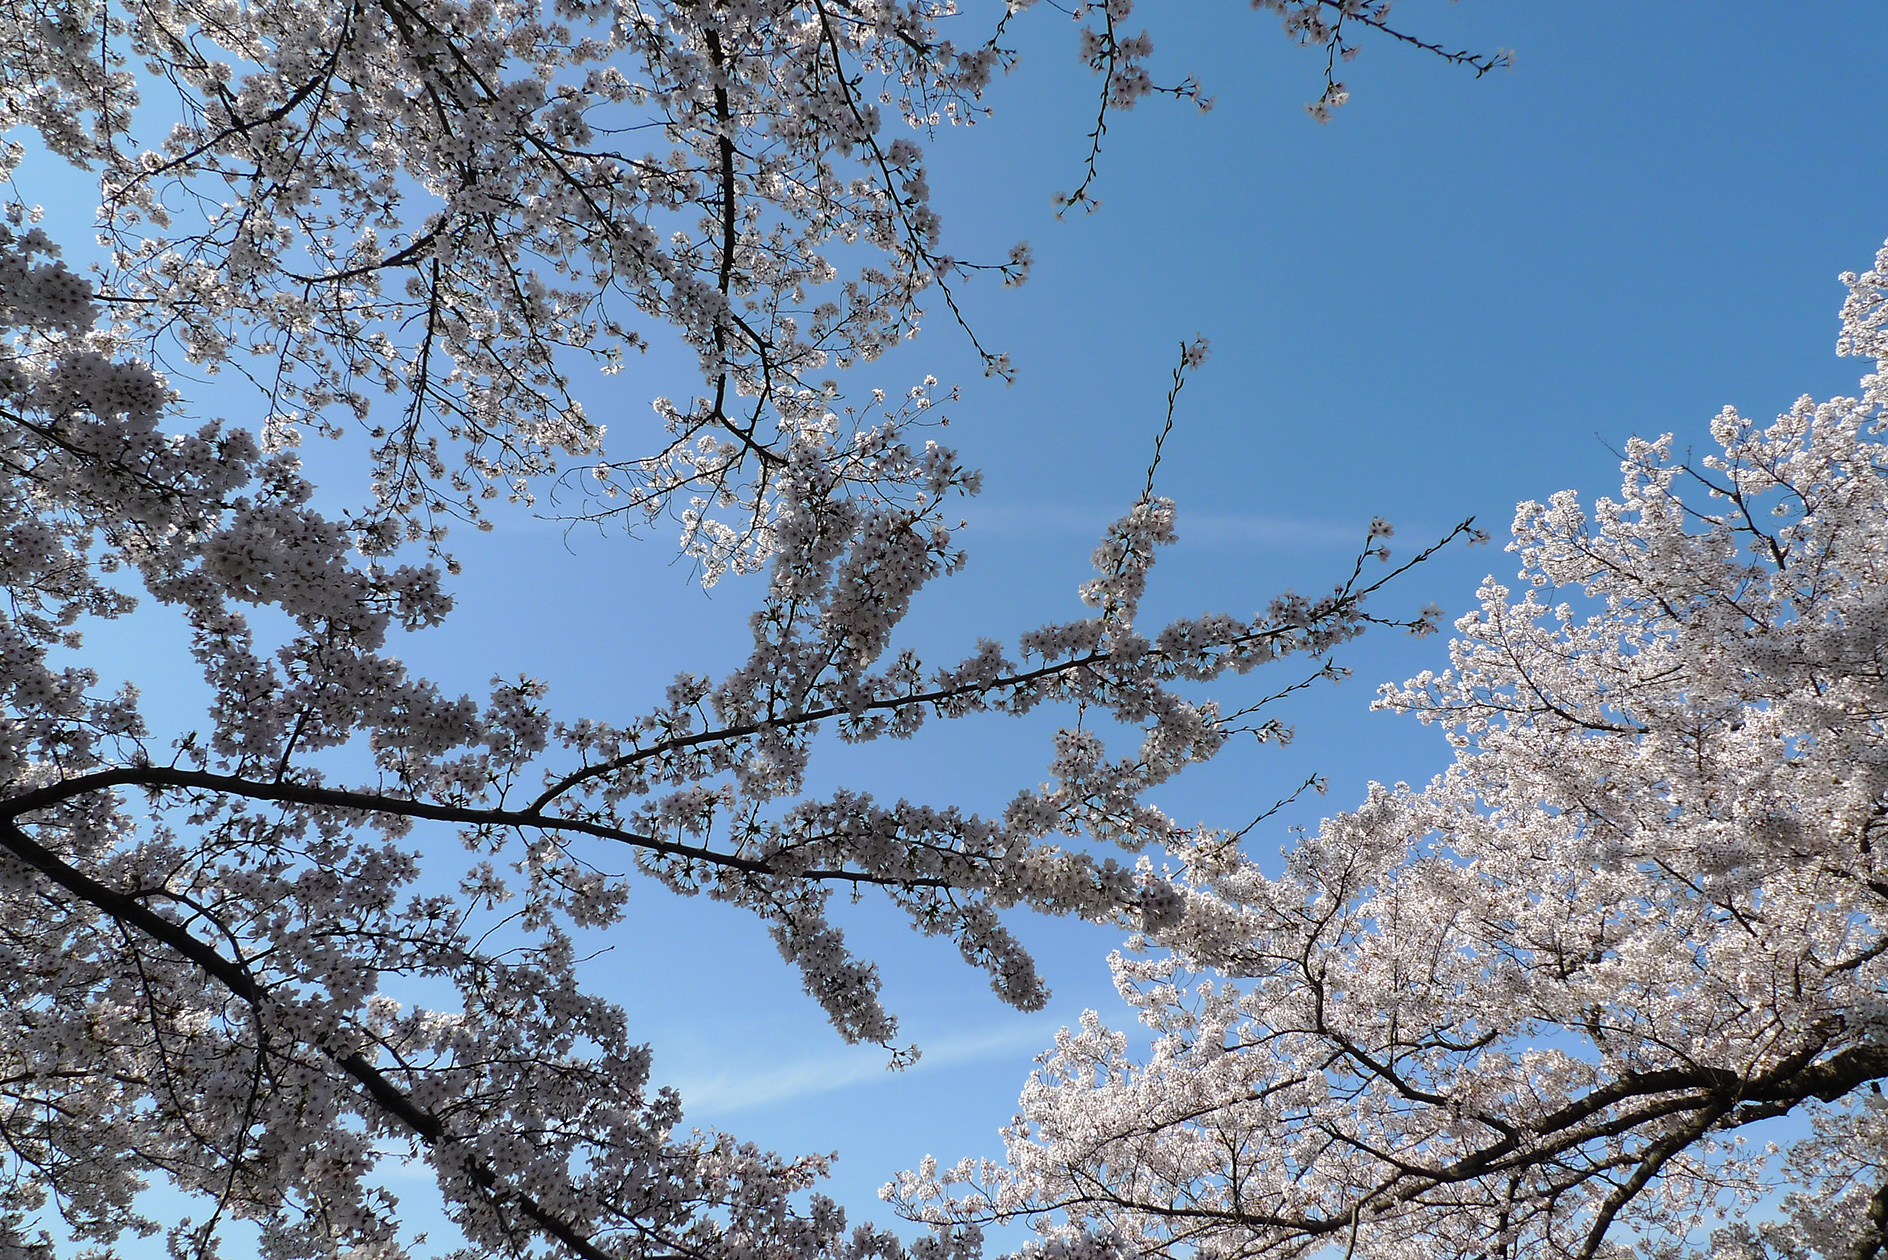 60+ of the Best Sakura Photos from Japan『日本の桜の写真』